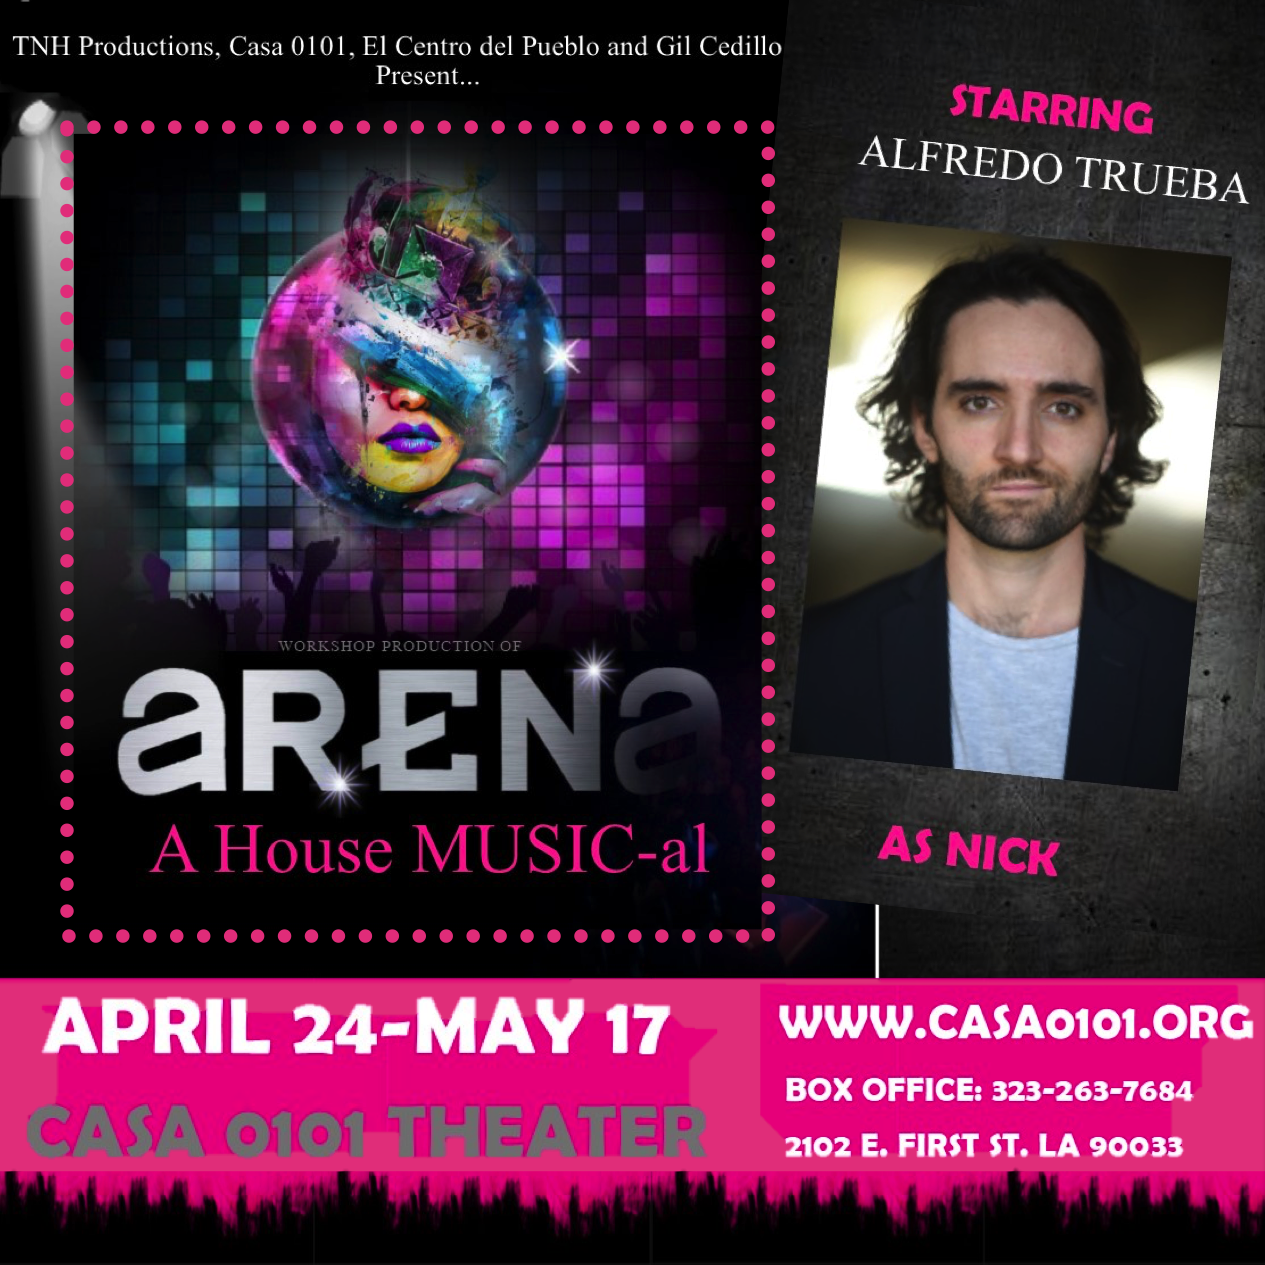 Arena: A House Musical